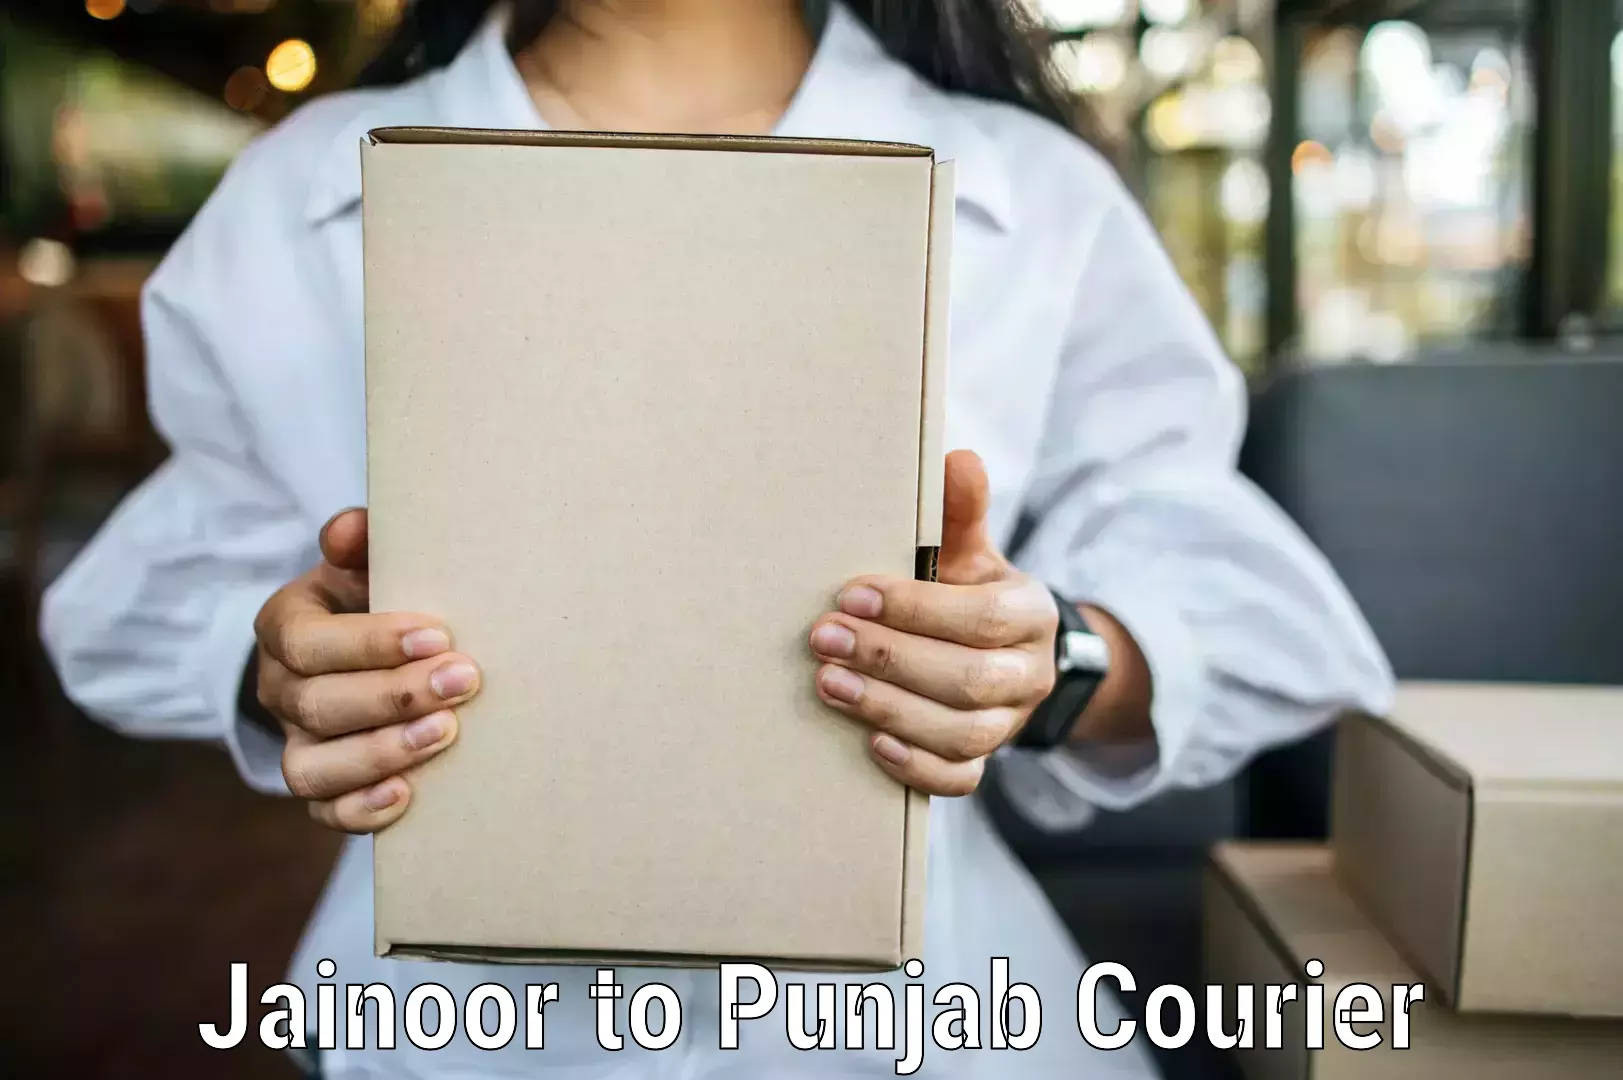 Courier service innovation Jainoor to Punjab